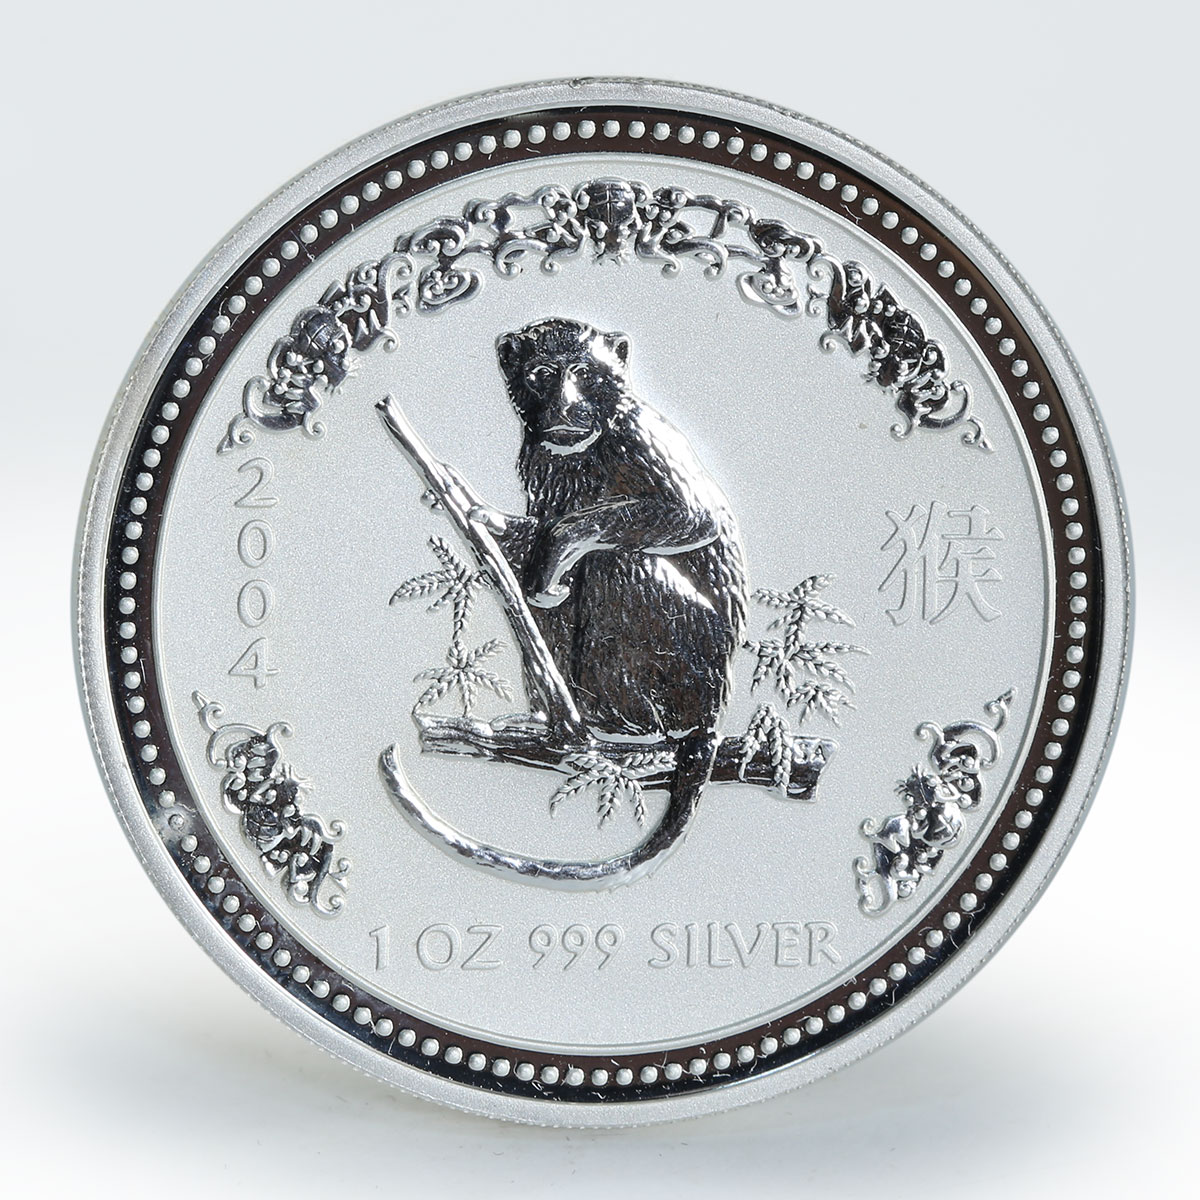 Australia 1 dollar Year of the Monkey Lunar Series I Silver coin 1 oz 2004